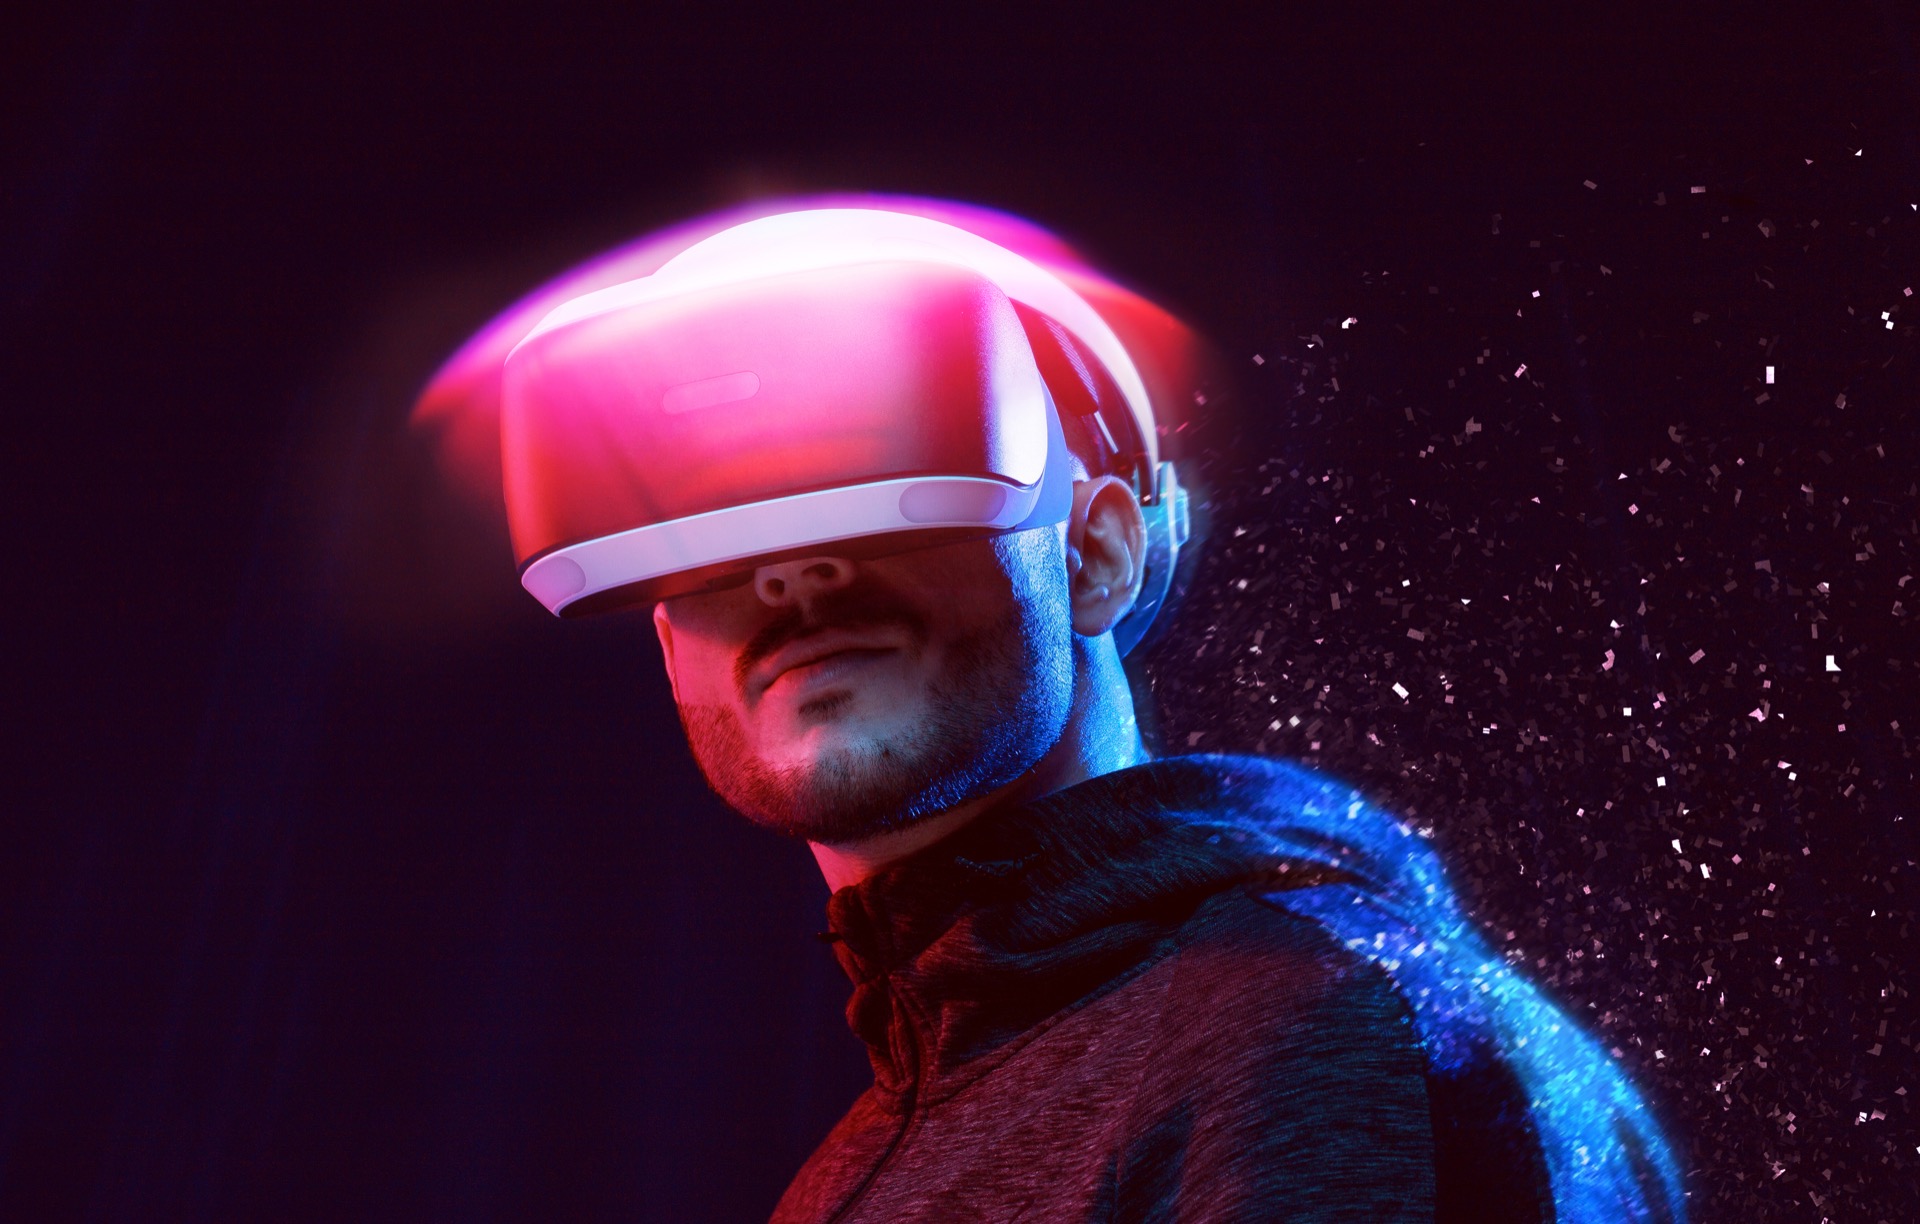 Le casque de réalité virtuelle&nbsp; © Dmitry Kirichai (Дмитрий Киричай), Adobe Stock